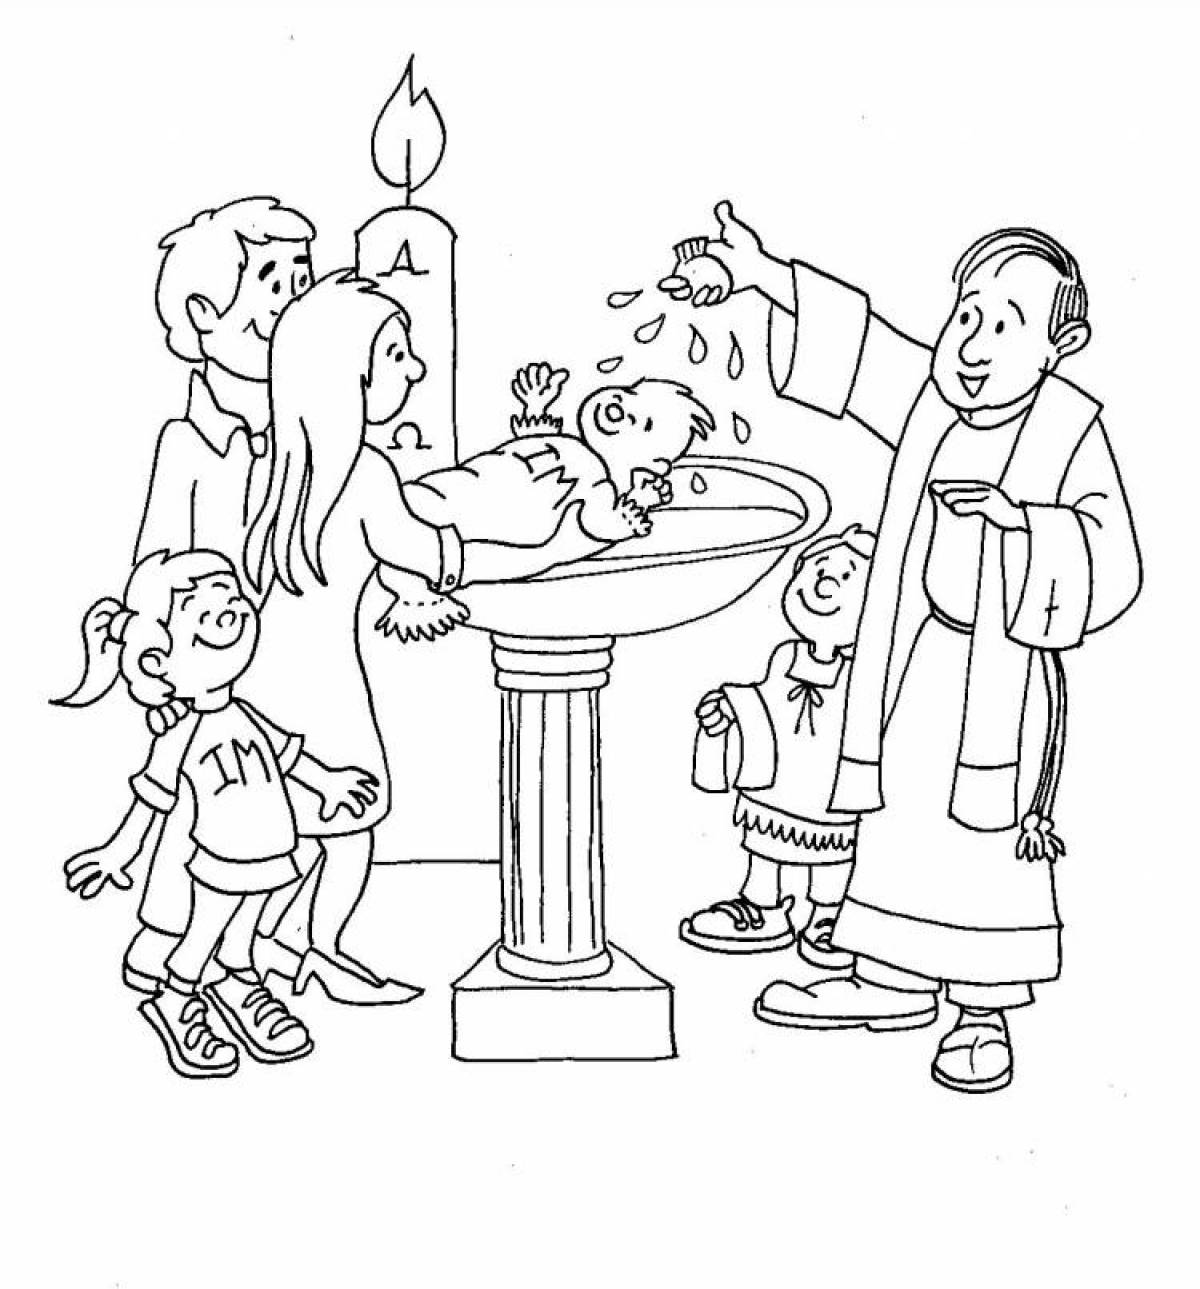 Children's baptism playful coloring book